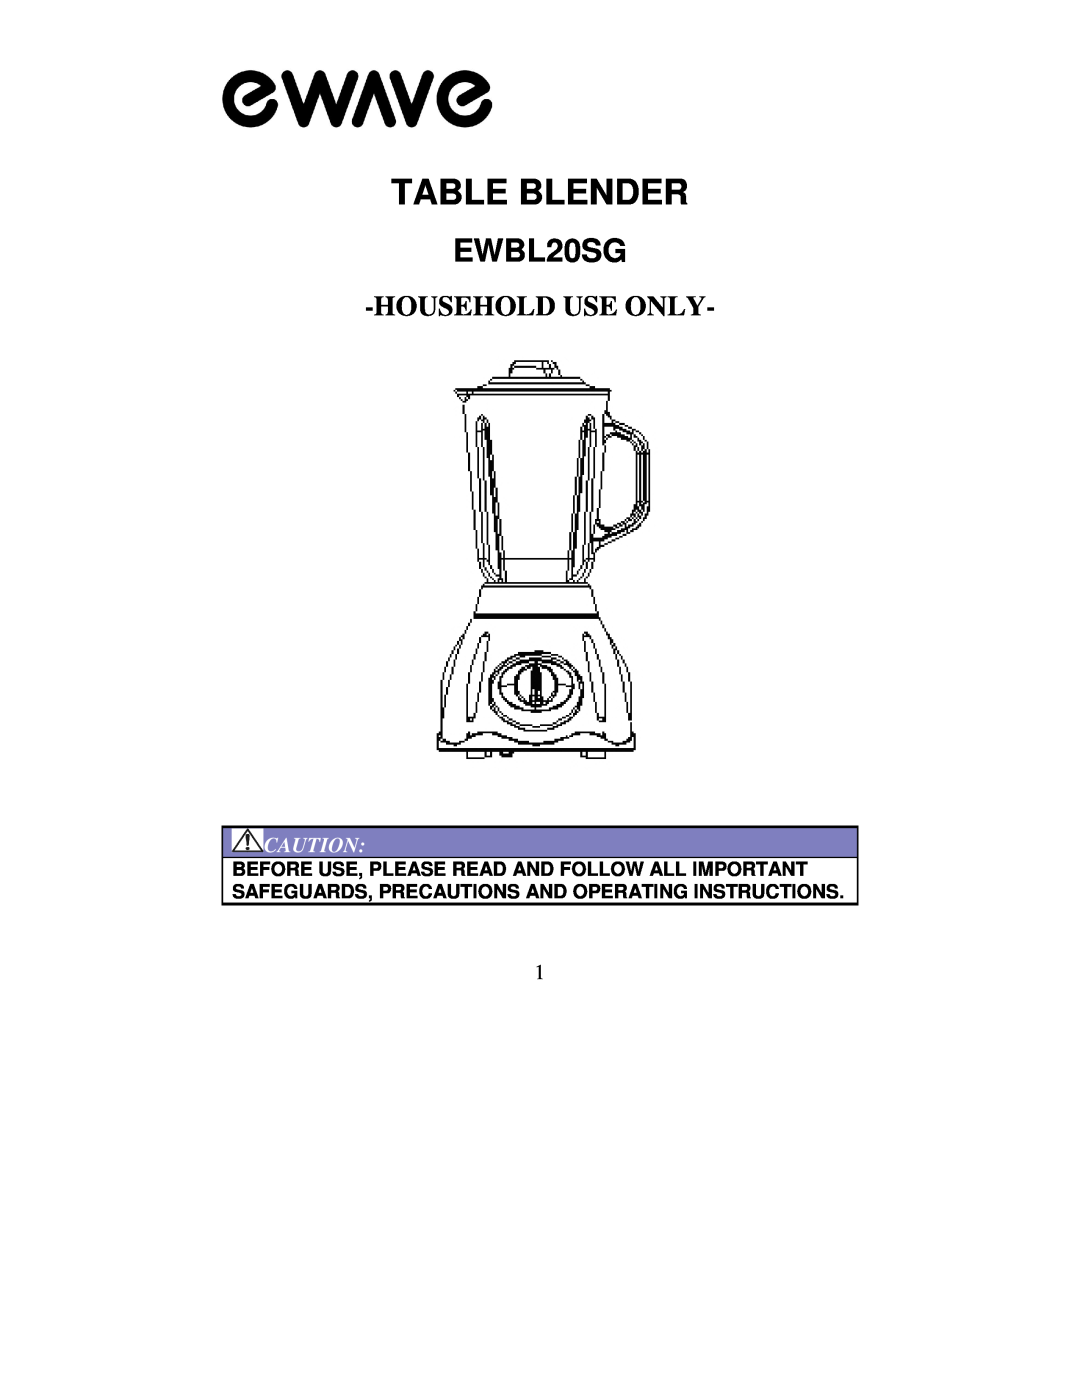 Magic Chef EWBL20SG operating instructions Table Blender, Householduse Only 